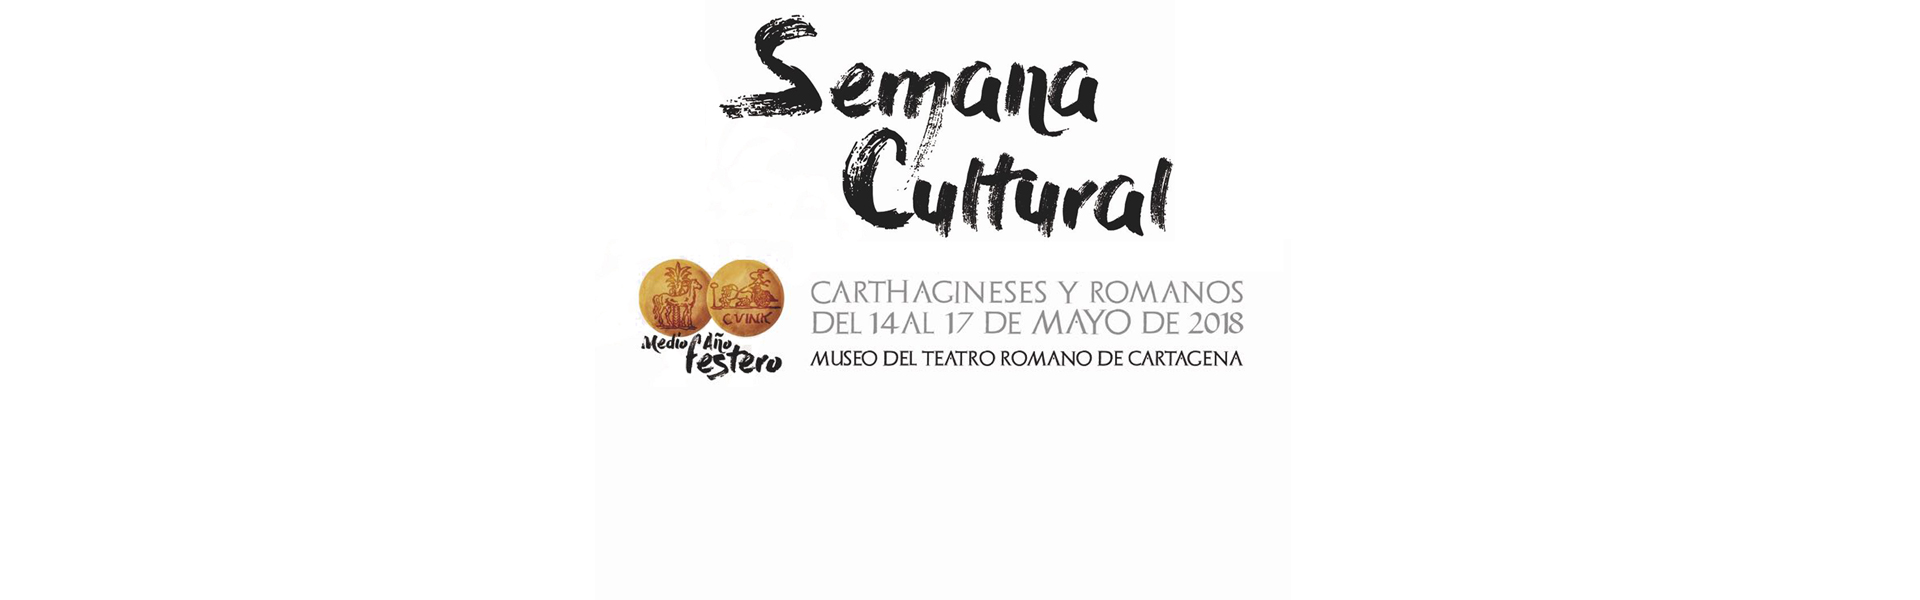 Semana cultura Carthagineses y Romanos